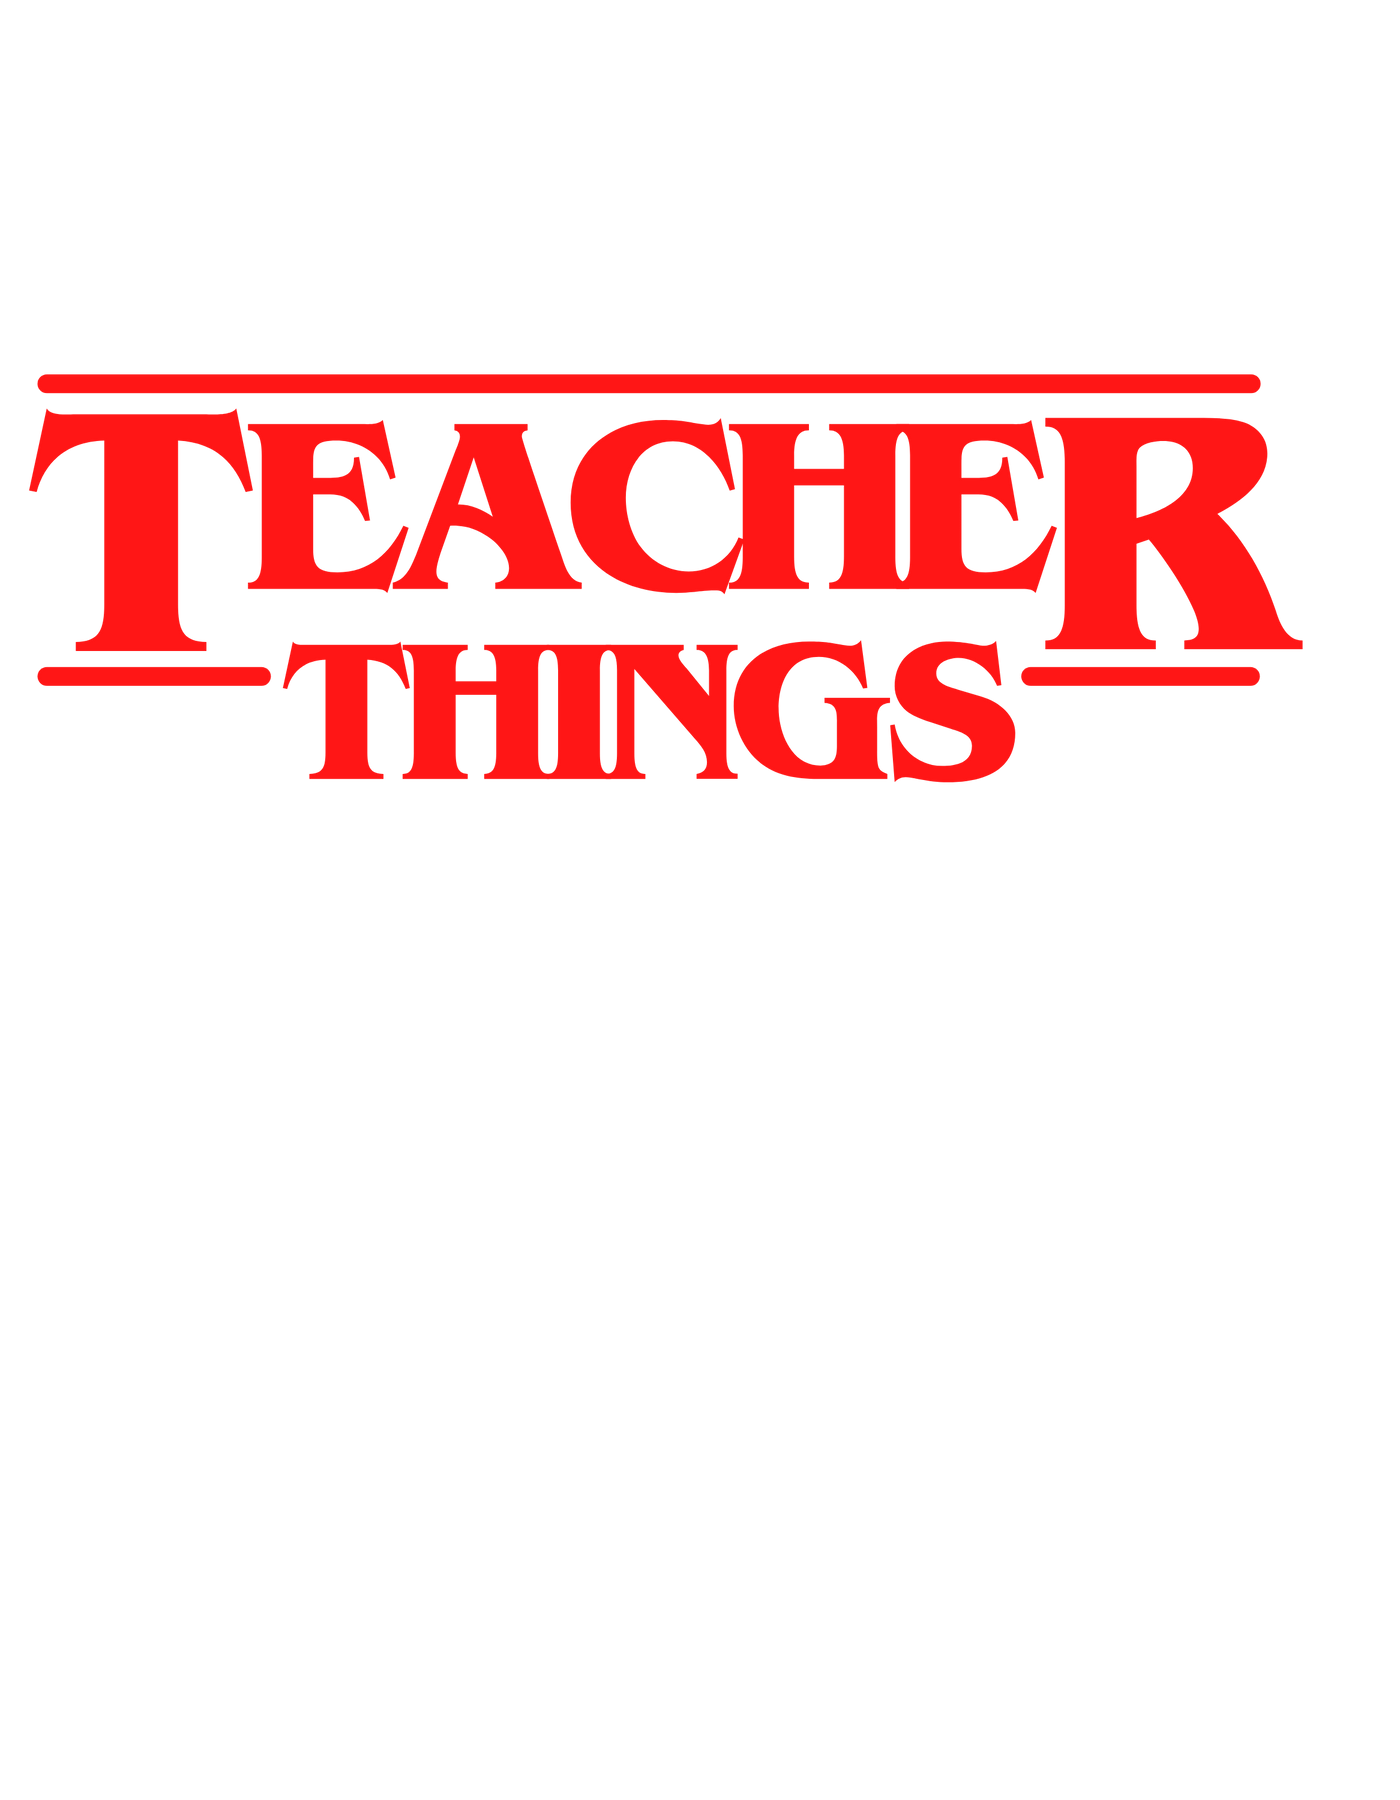 TEACHER THINGS